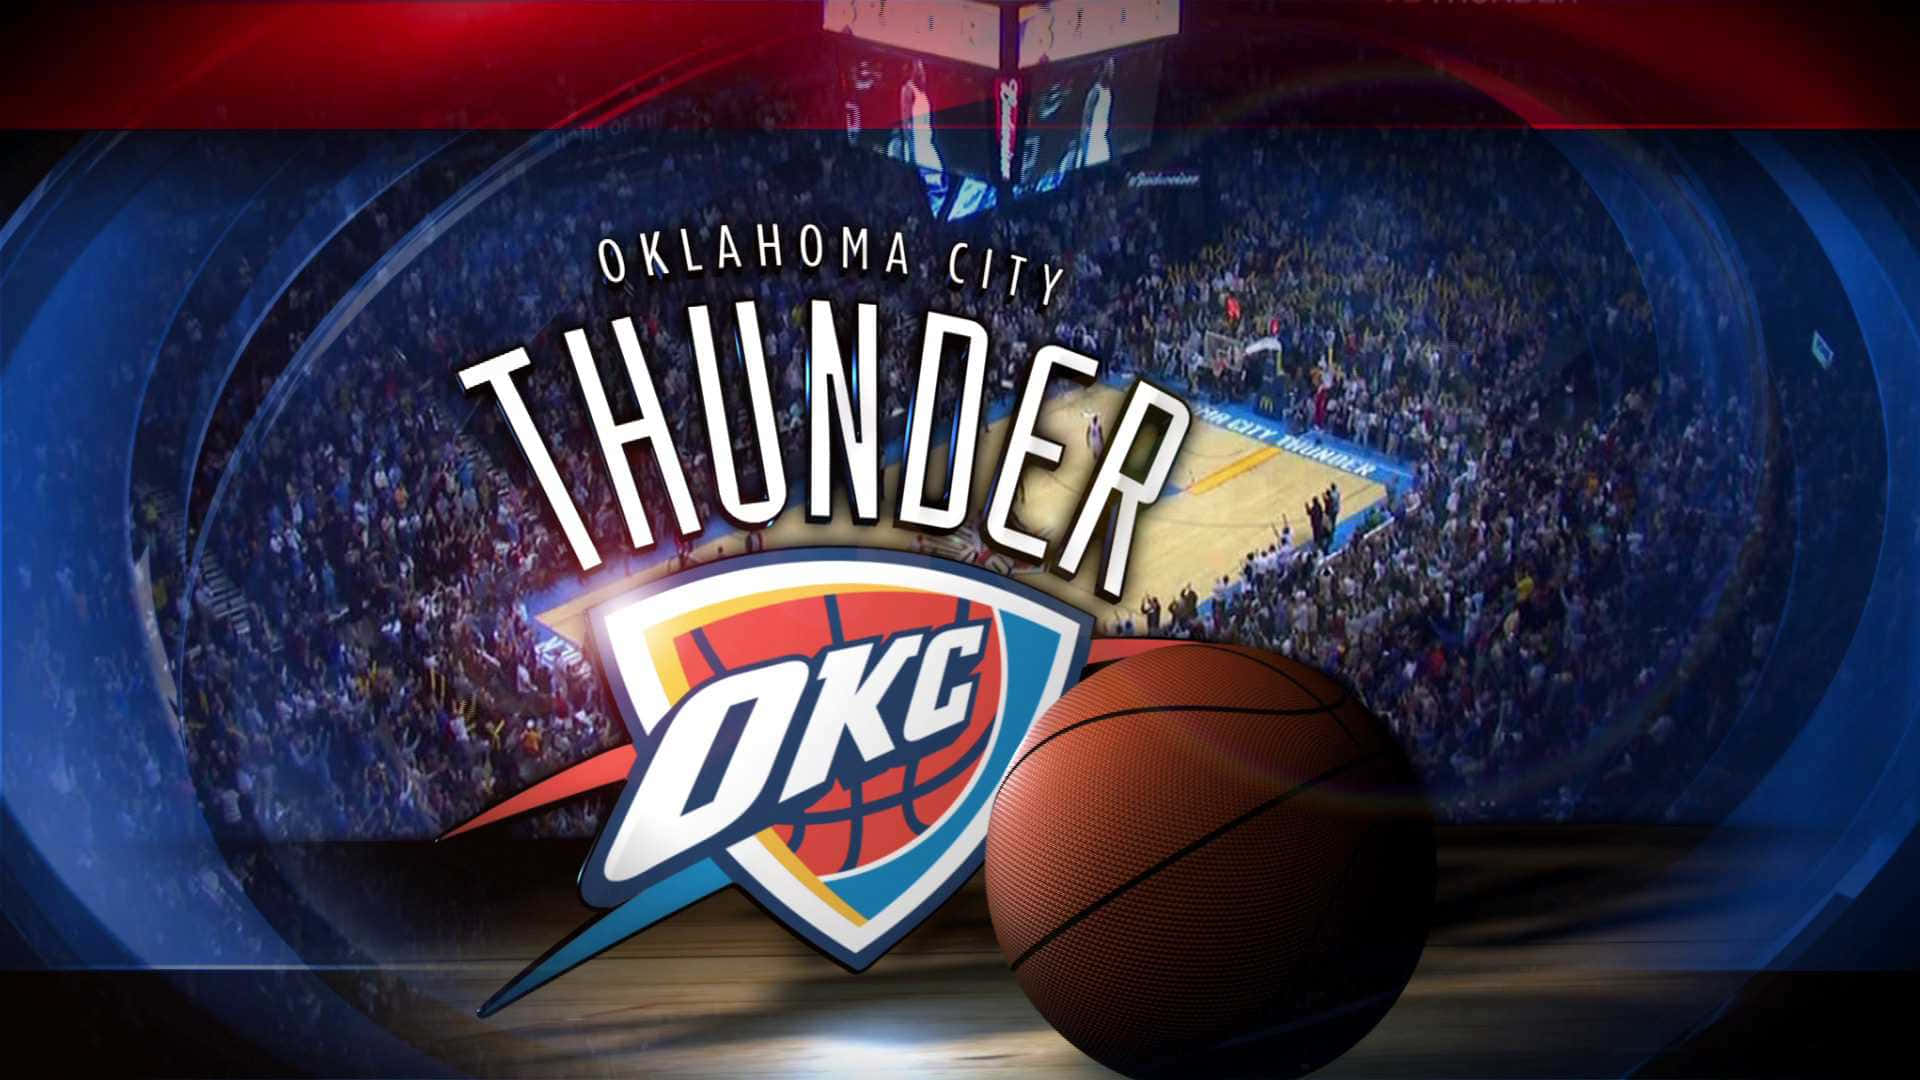 NBA League Oklahoma City Thunder OKC Basketball Wallpaper